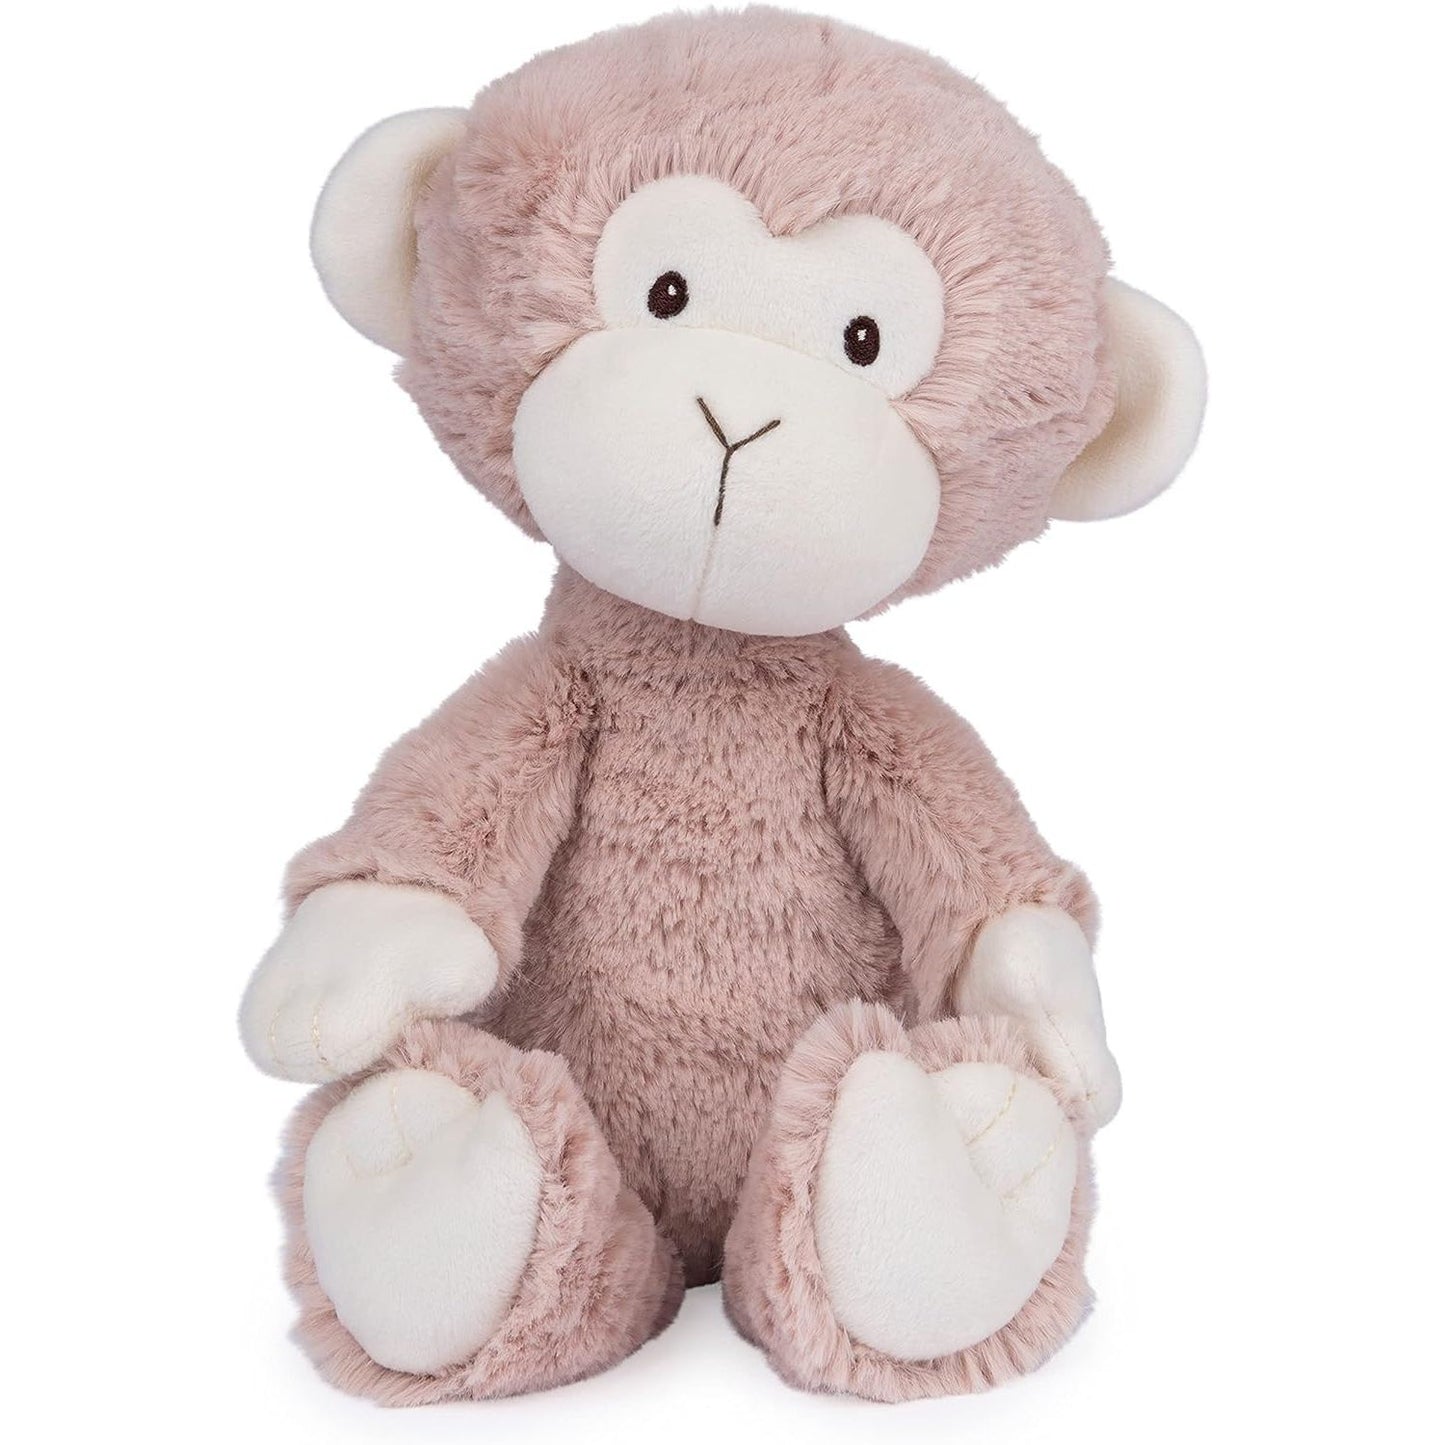 Micah Monkey Premium Plush Stuffed Animal - Heretoserveyou